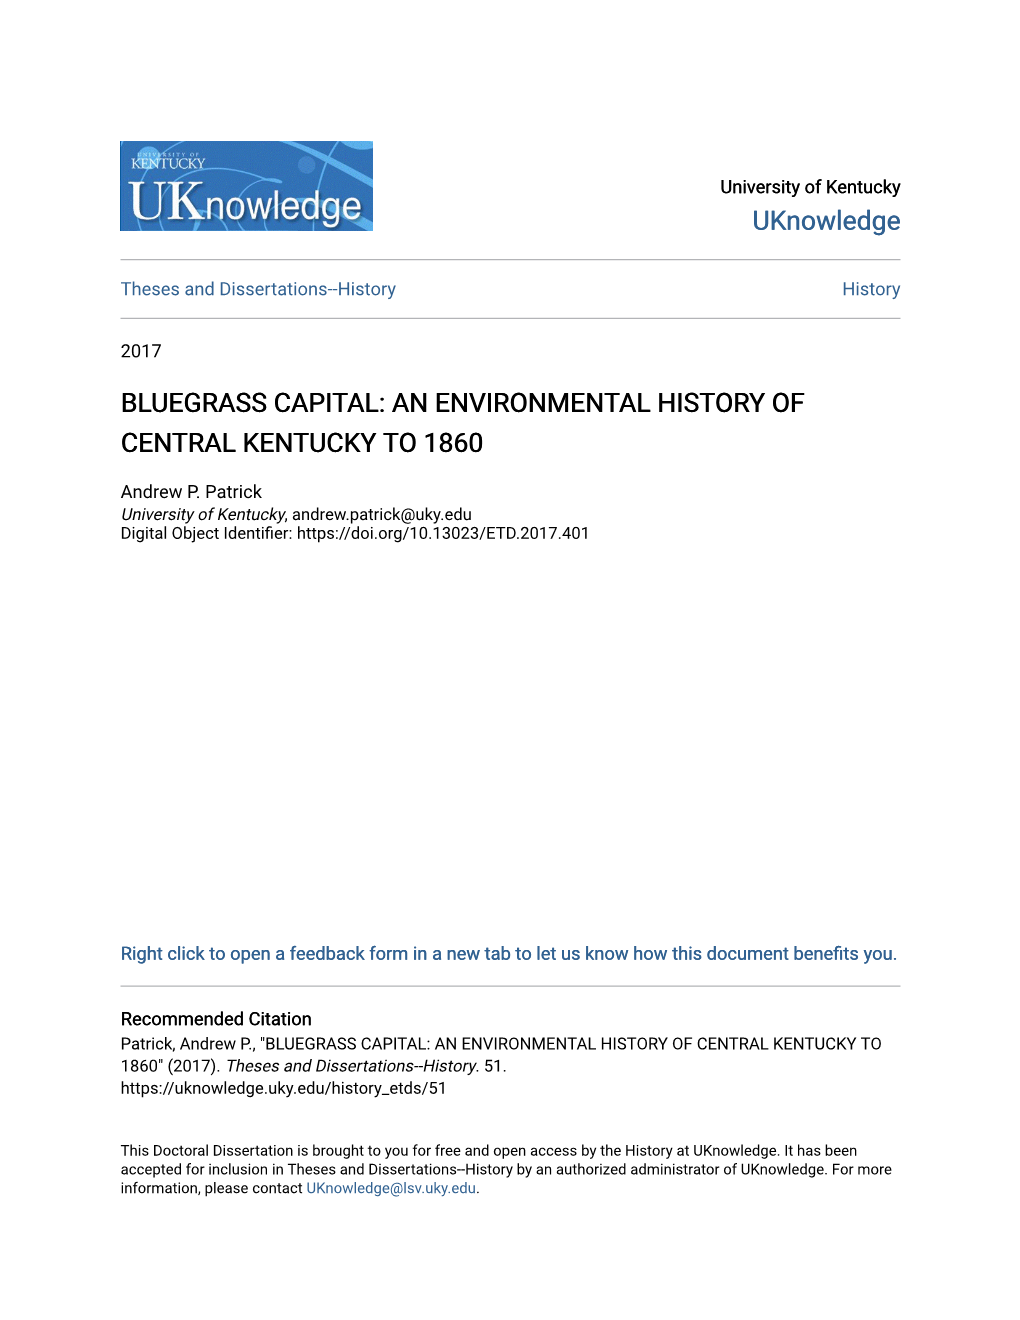 Bluegrass Capital: an Environmental History of Central Kentucky to 1860